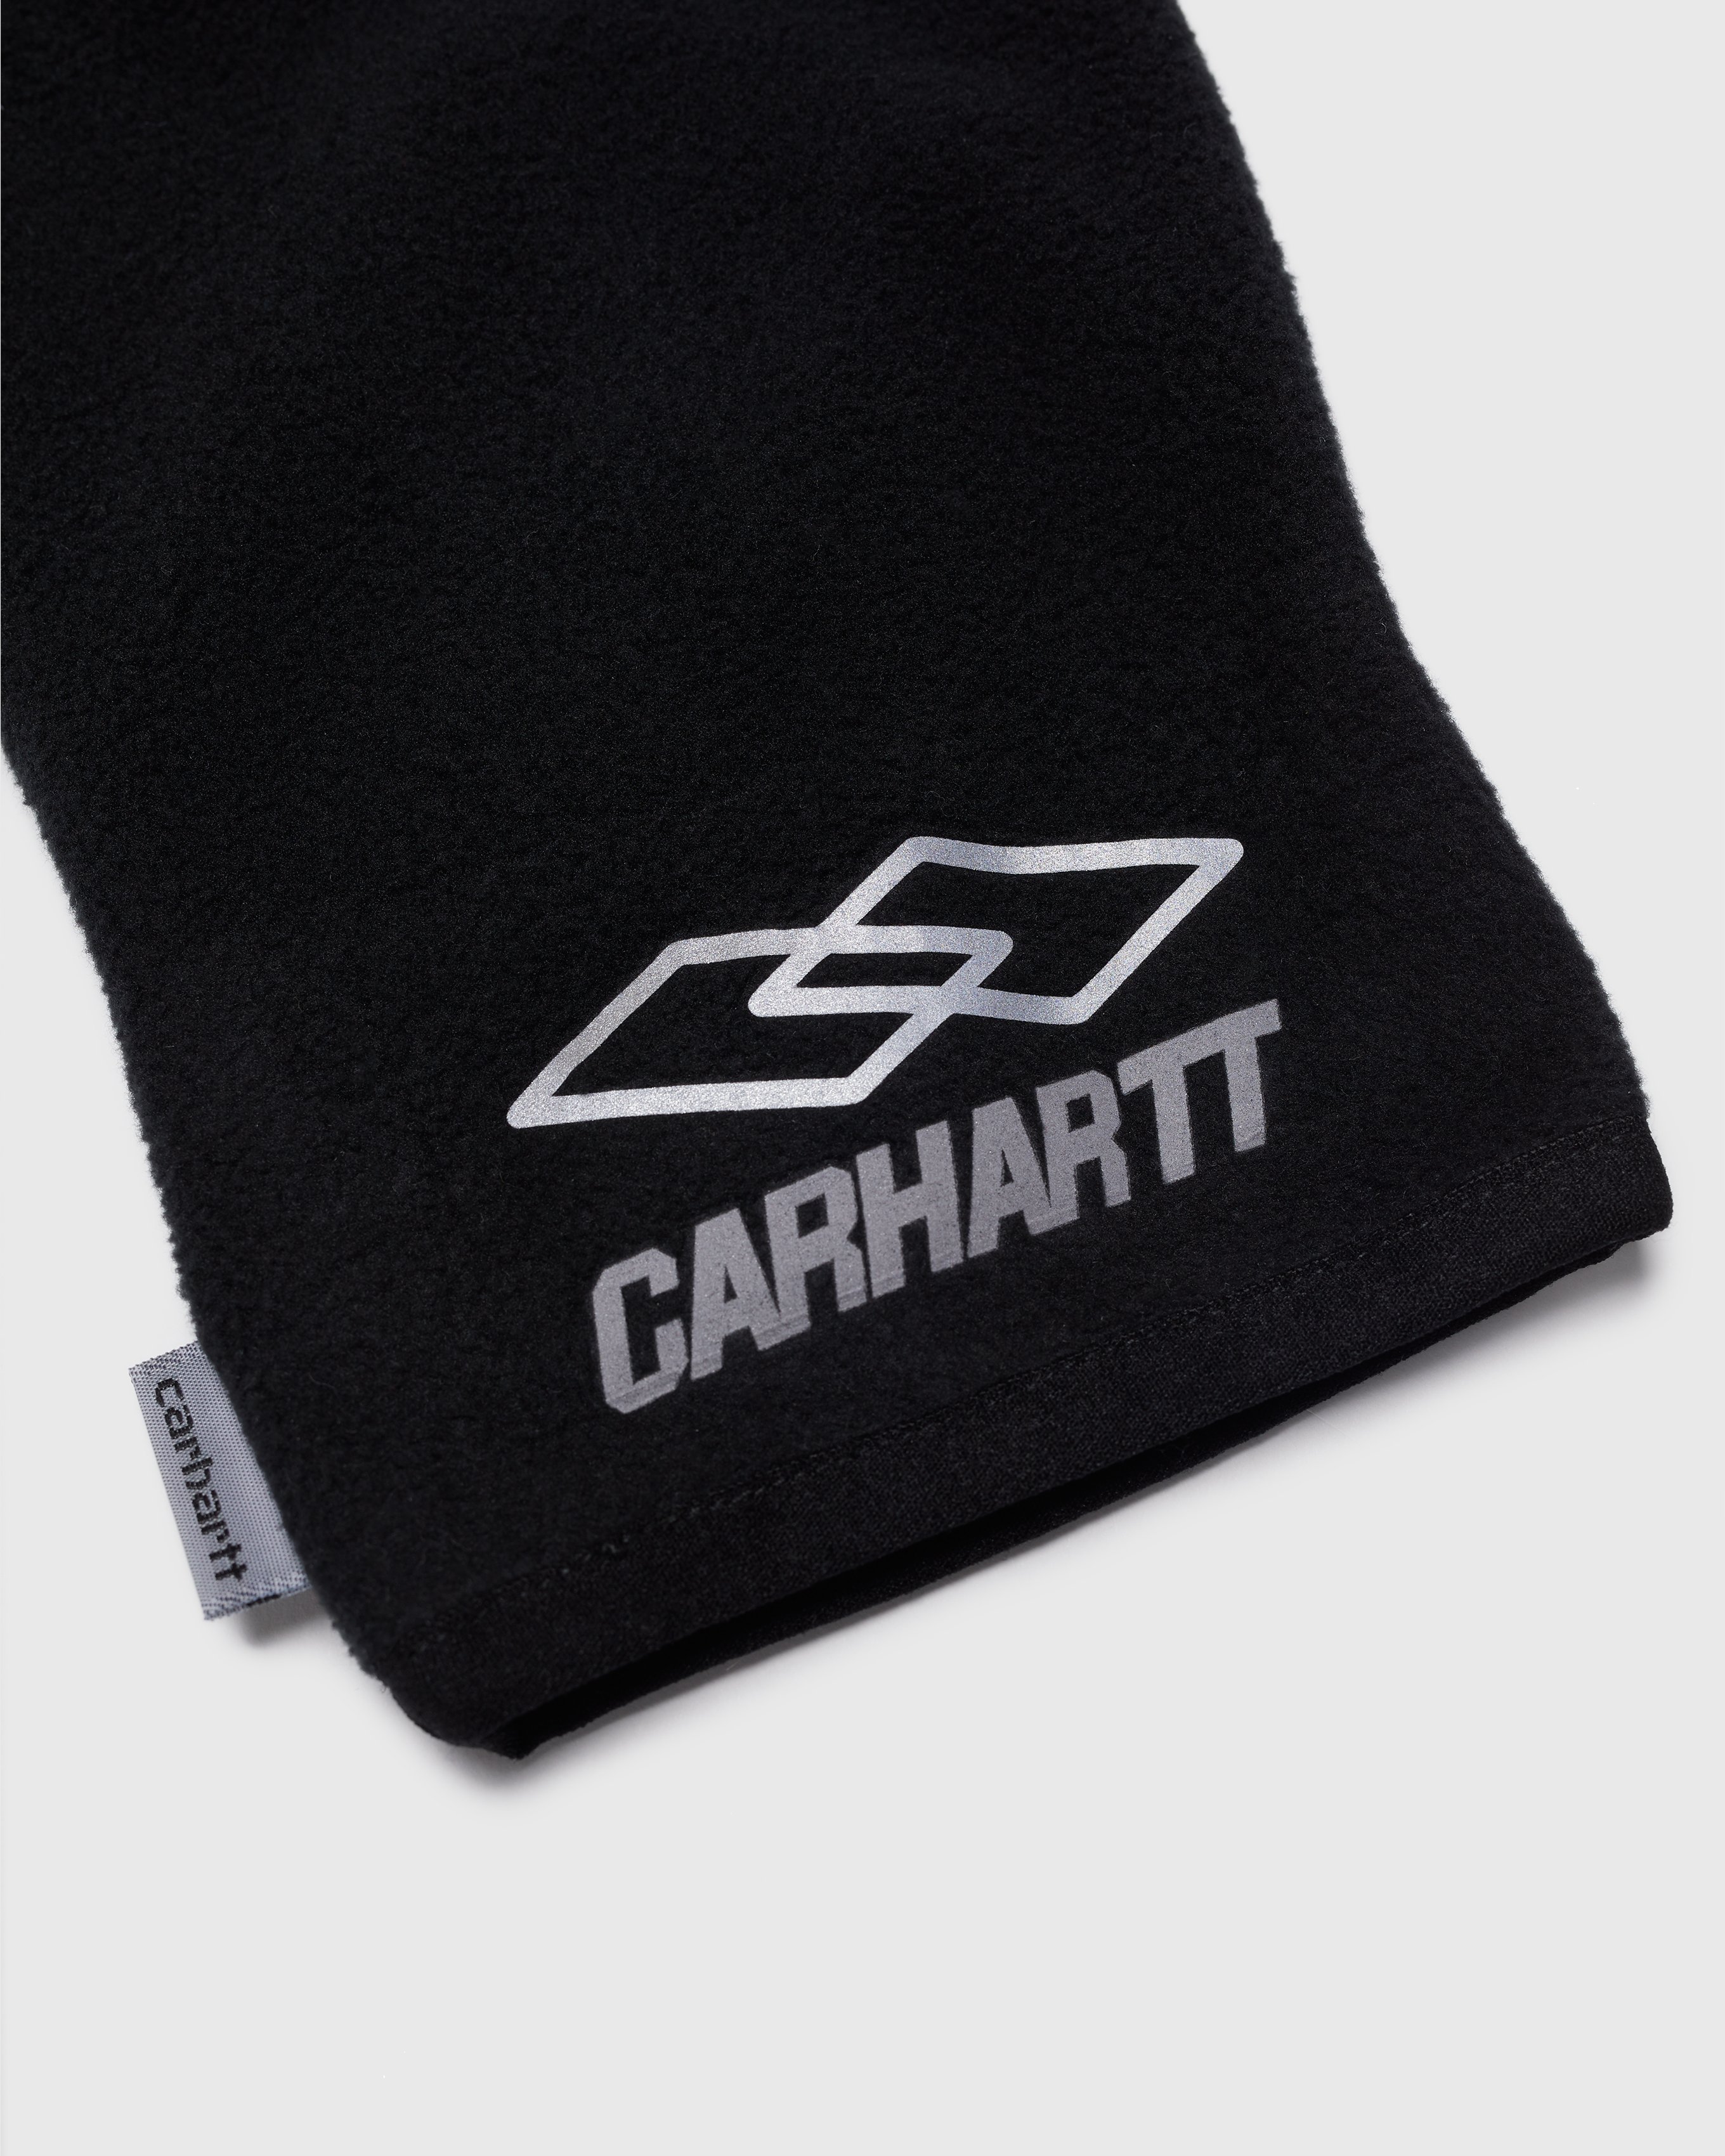 Carhartt WIP x Ljubav - Beaufort Gloves - Accessories - Black - Image 4